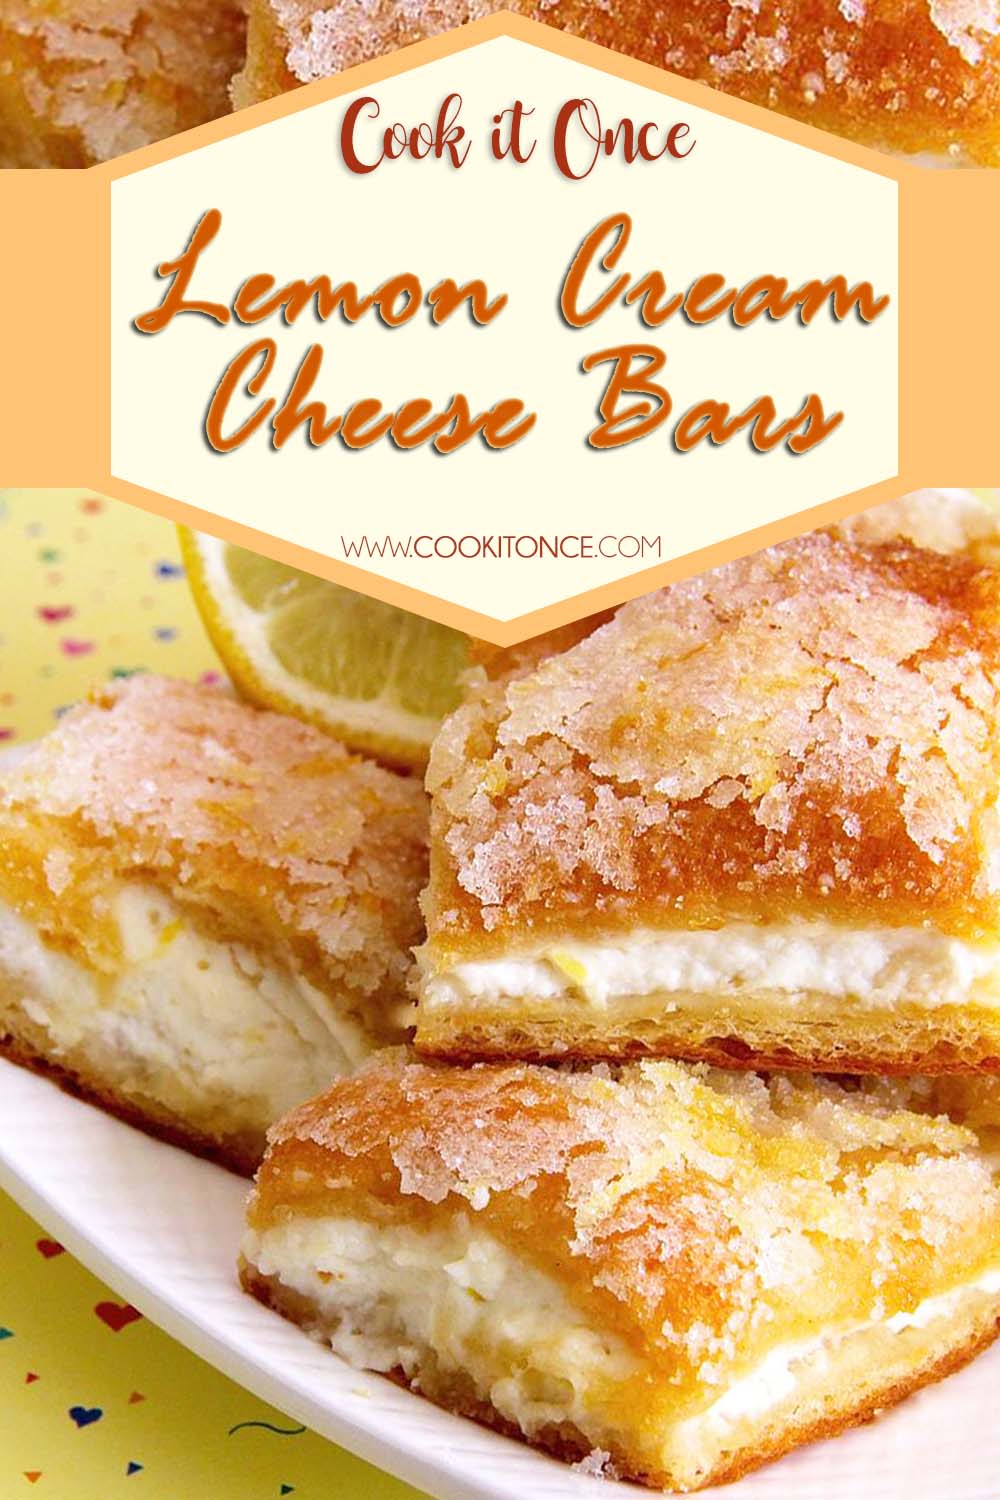 Cream Cheese Bars Recipe